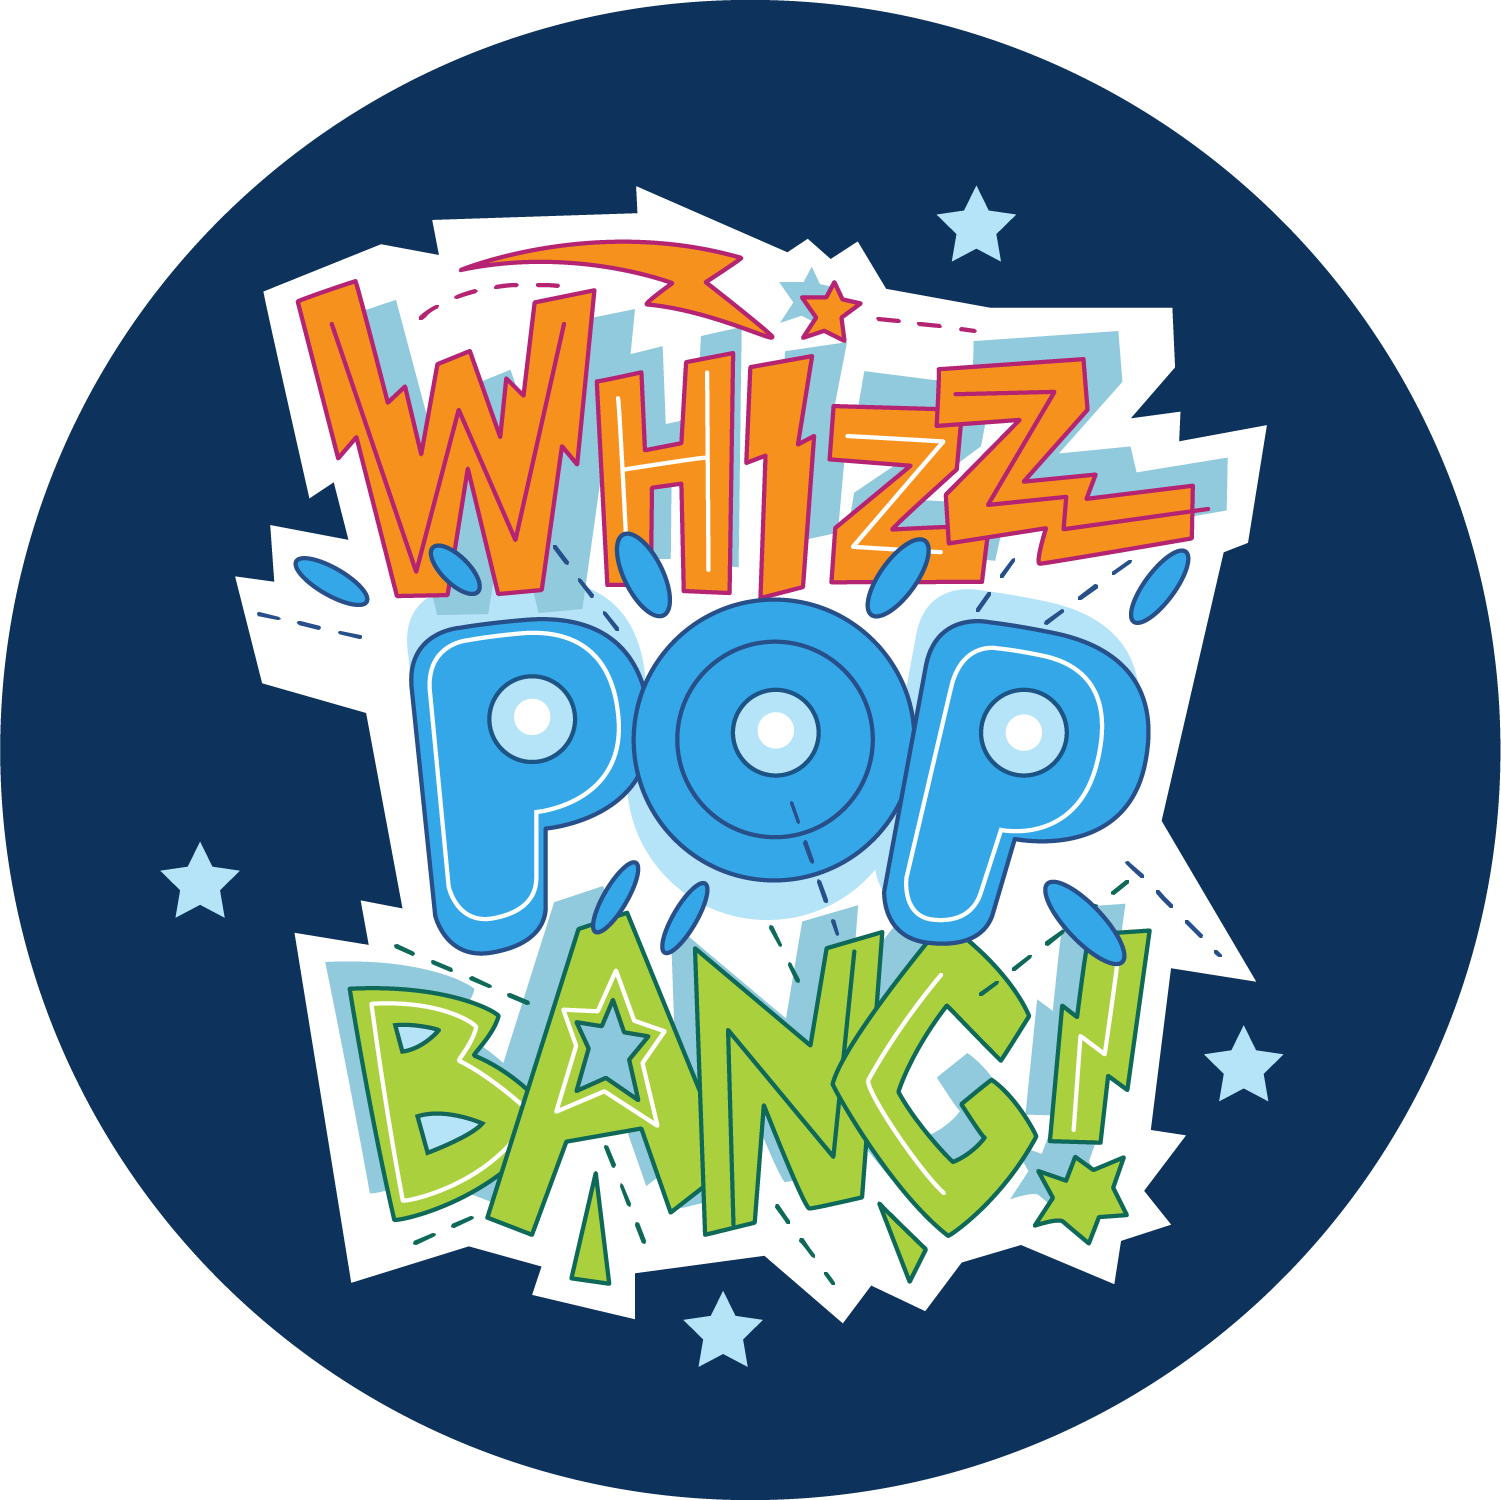 Whizz Pop Bang